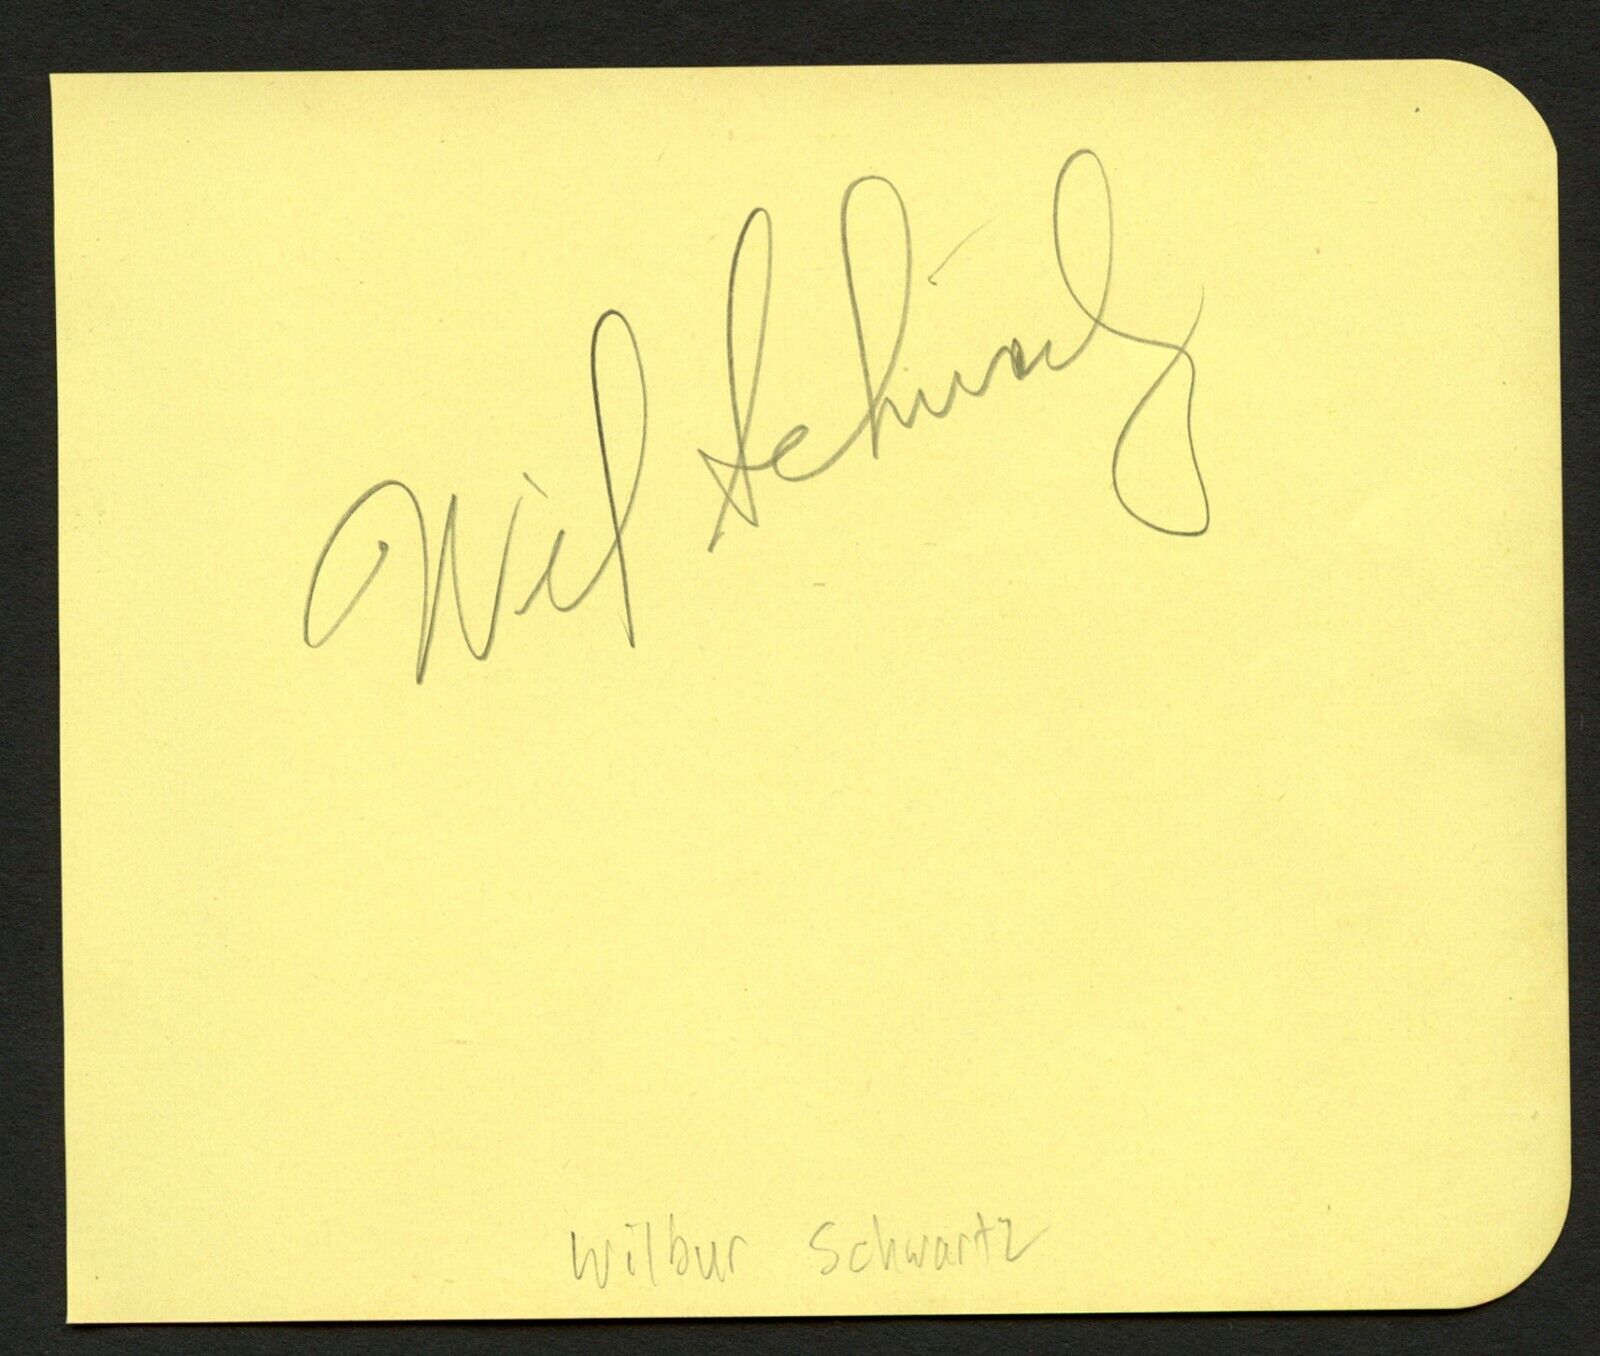 Wilbur Schwartz d1990 signed autograph 4x5 Album Page Glenn Miller Orchestra